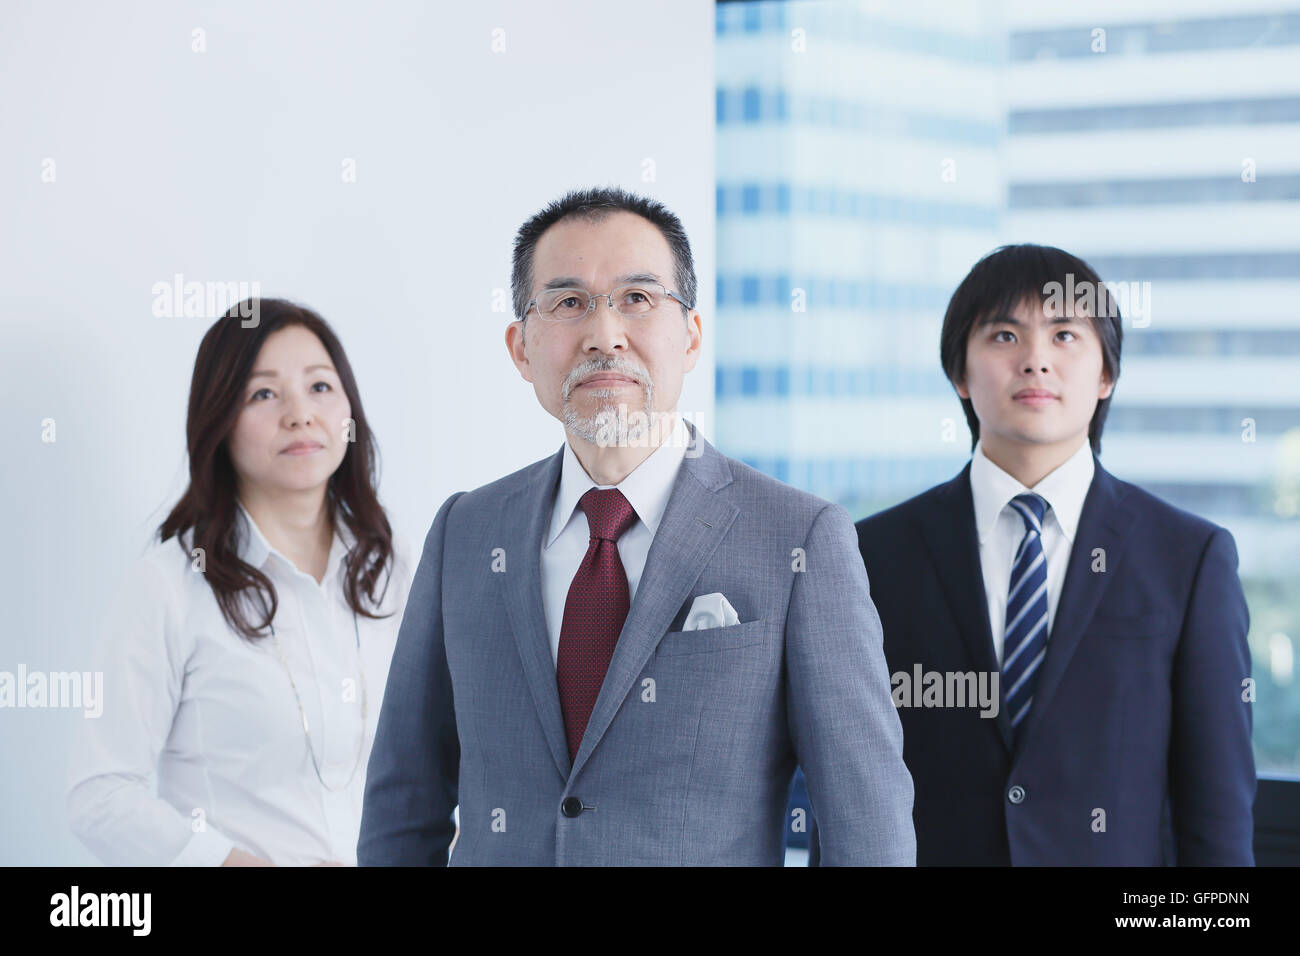 Japanese businesspeople Stock Photo